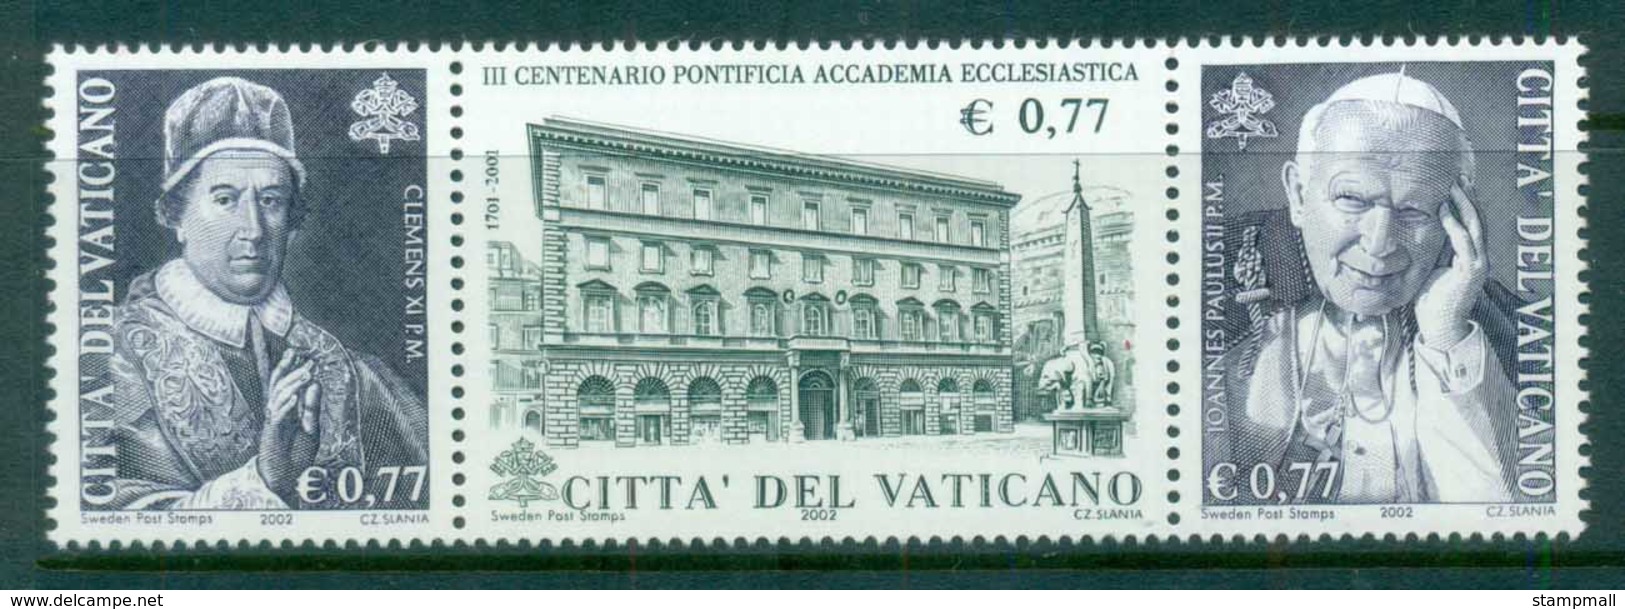 Vatican 2002 Pontifical Ecclesiastical Academy MUH - Unused Stamps